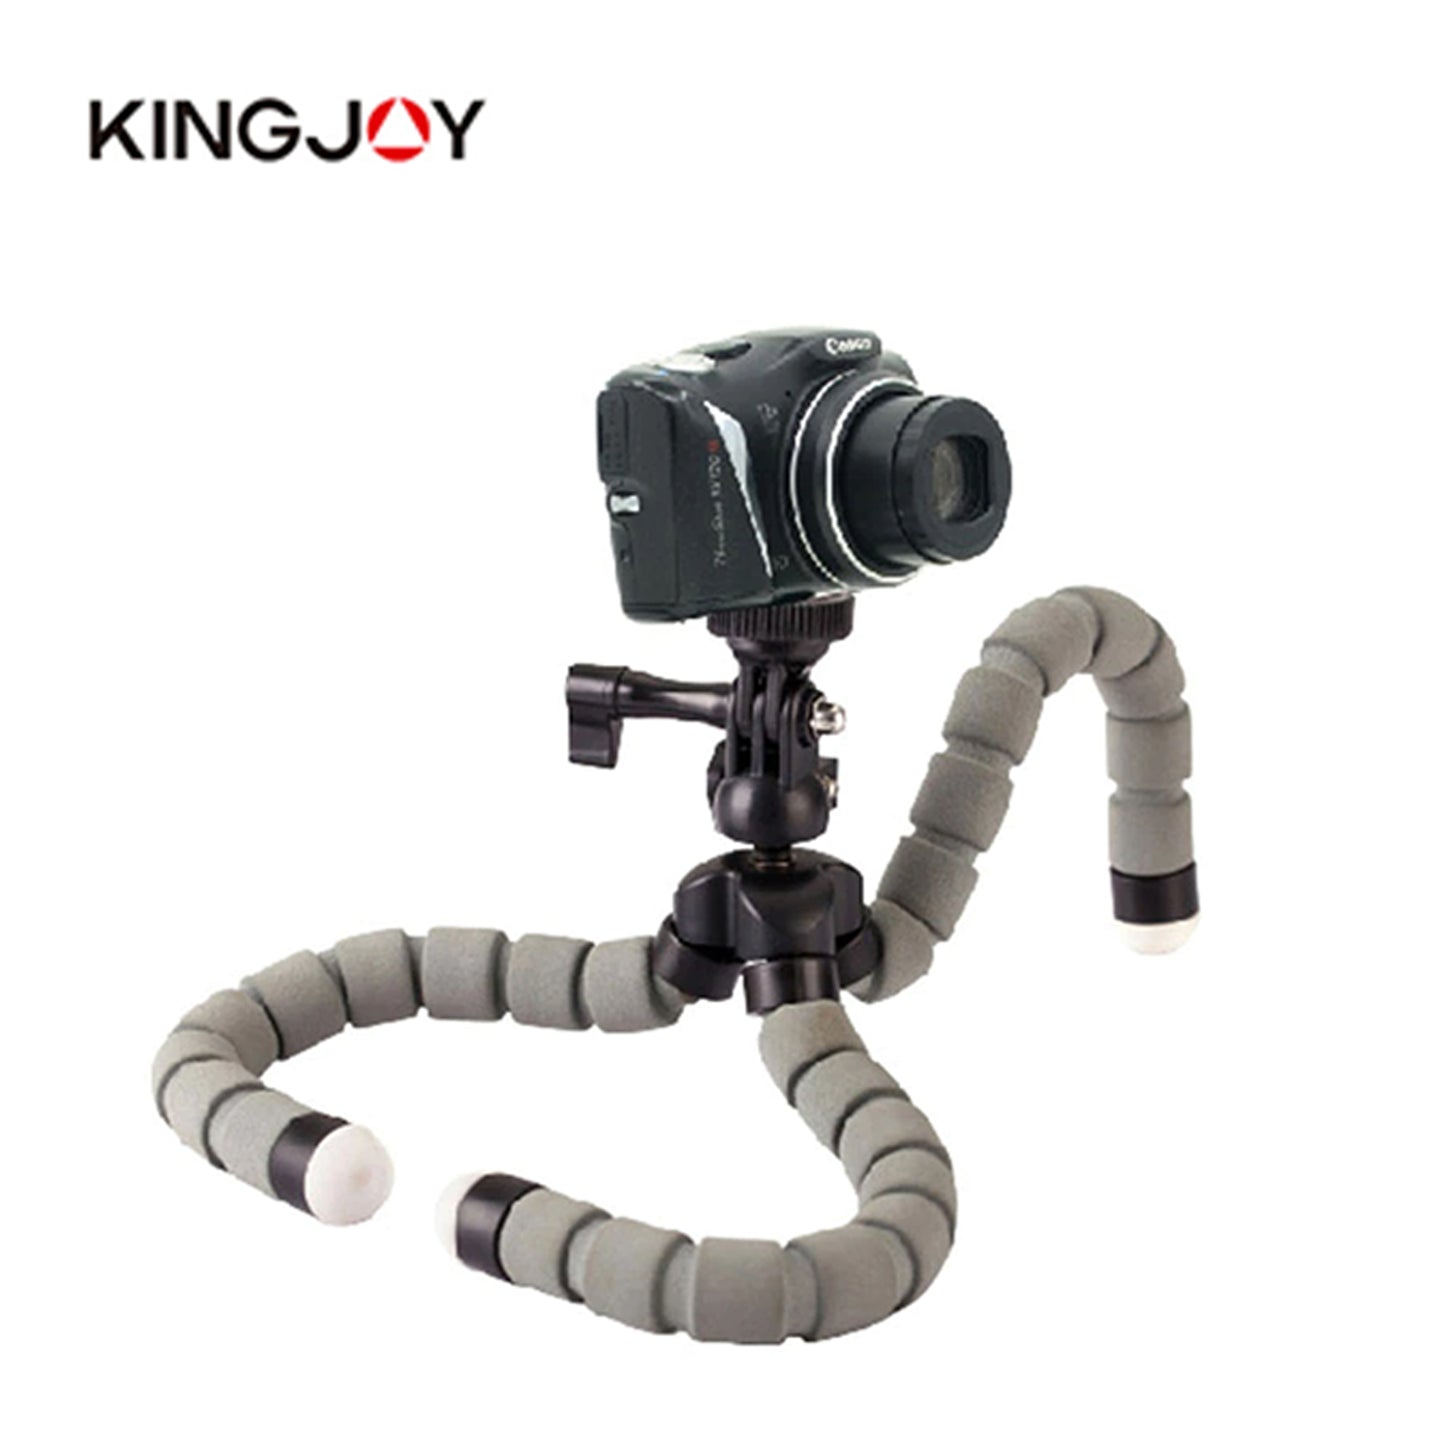 Kingjoy KT-600S portable tripod